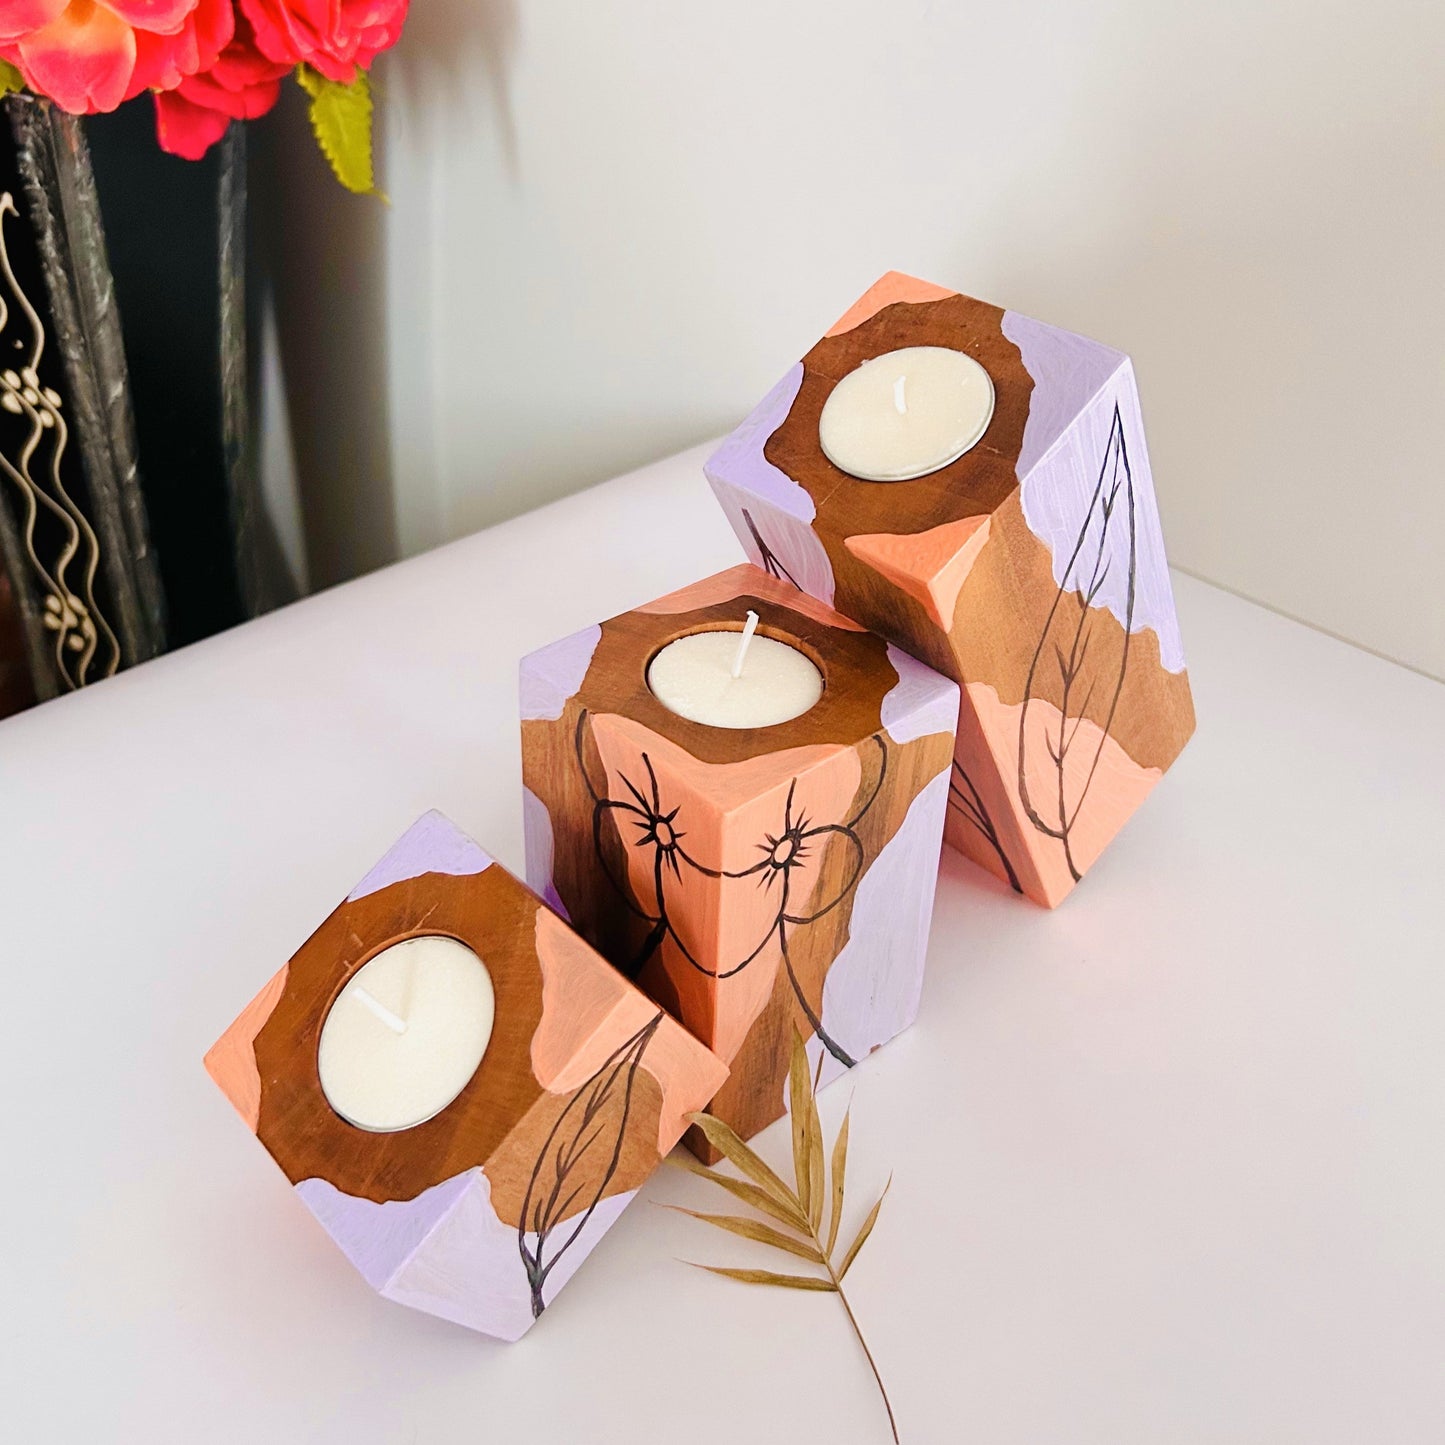 LEMONGINGER PASTEL DESIGNS CANDLE HOLDERS – Set of 3 candle holders made of Natural Solid Wood